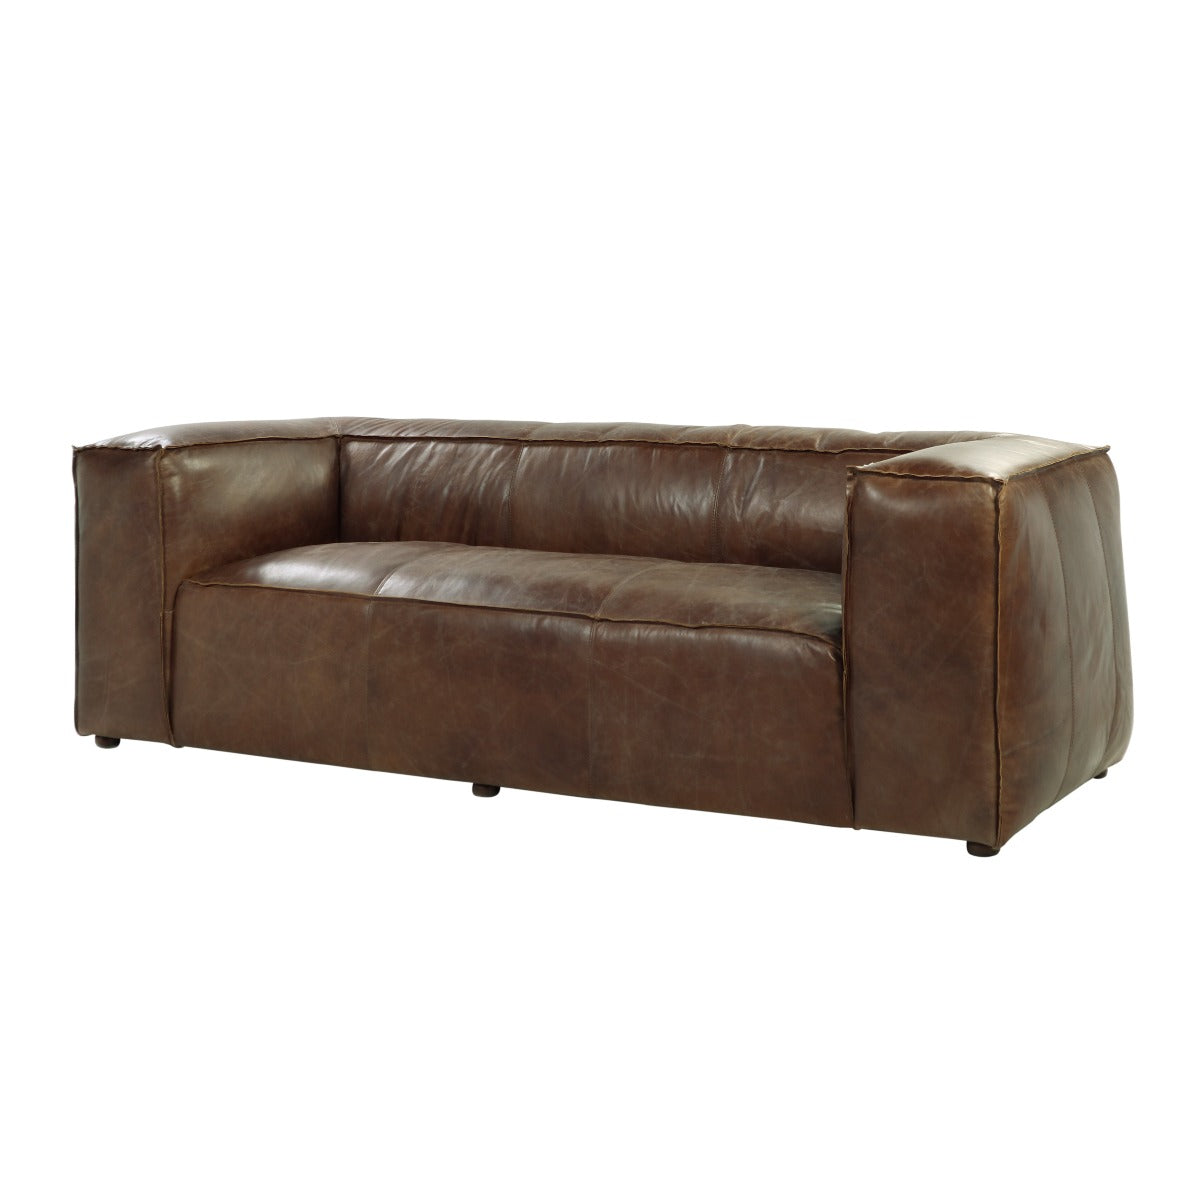 ACME Furniture TV & Media Units - Brancaster Sofa, Retro Brown Top Grain Leather